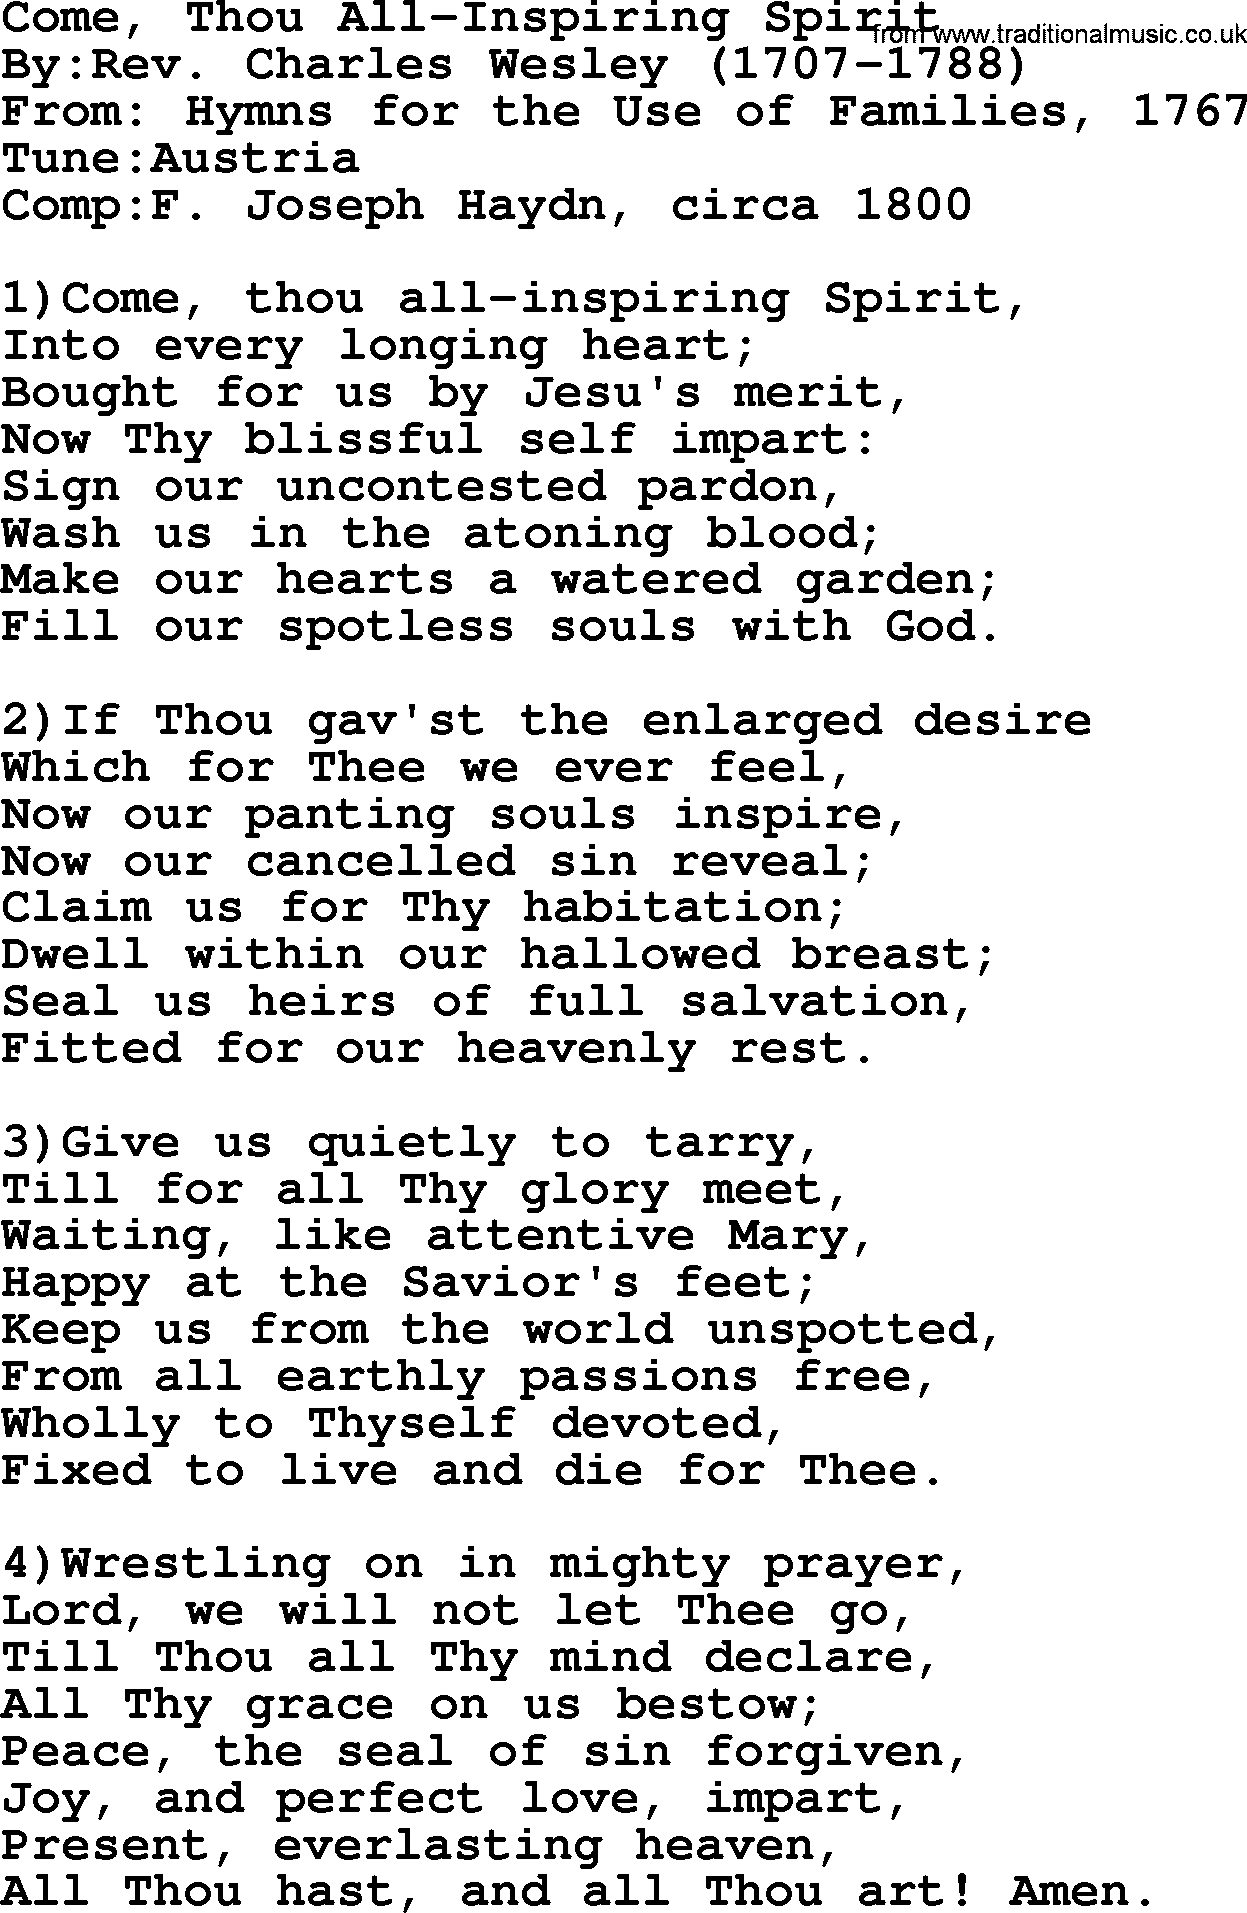 Methodist Hymn: Come, Thou All-inspiring Spirit, lyrics